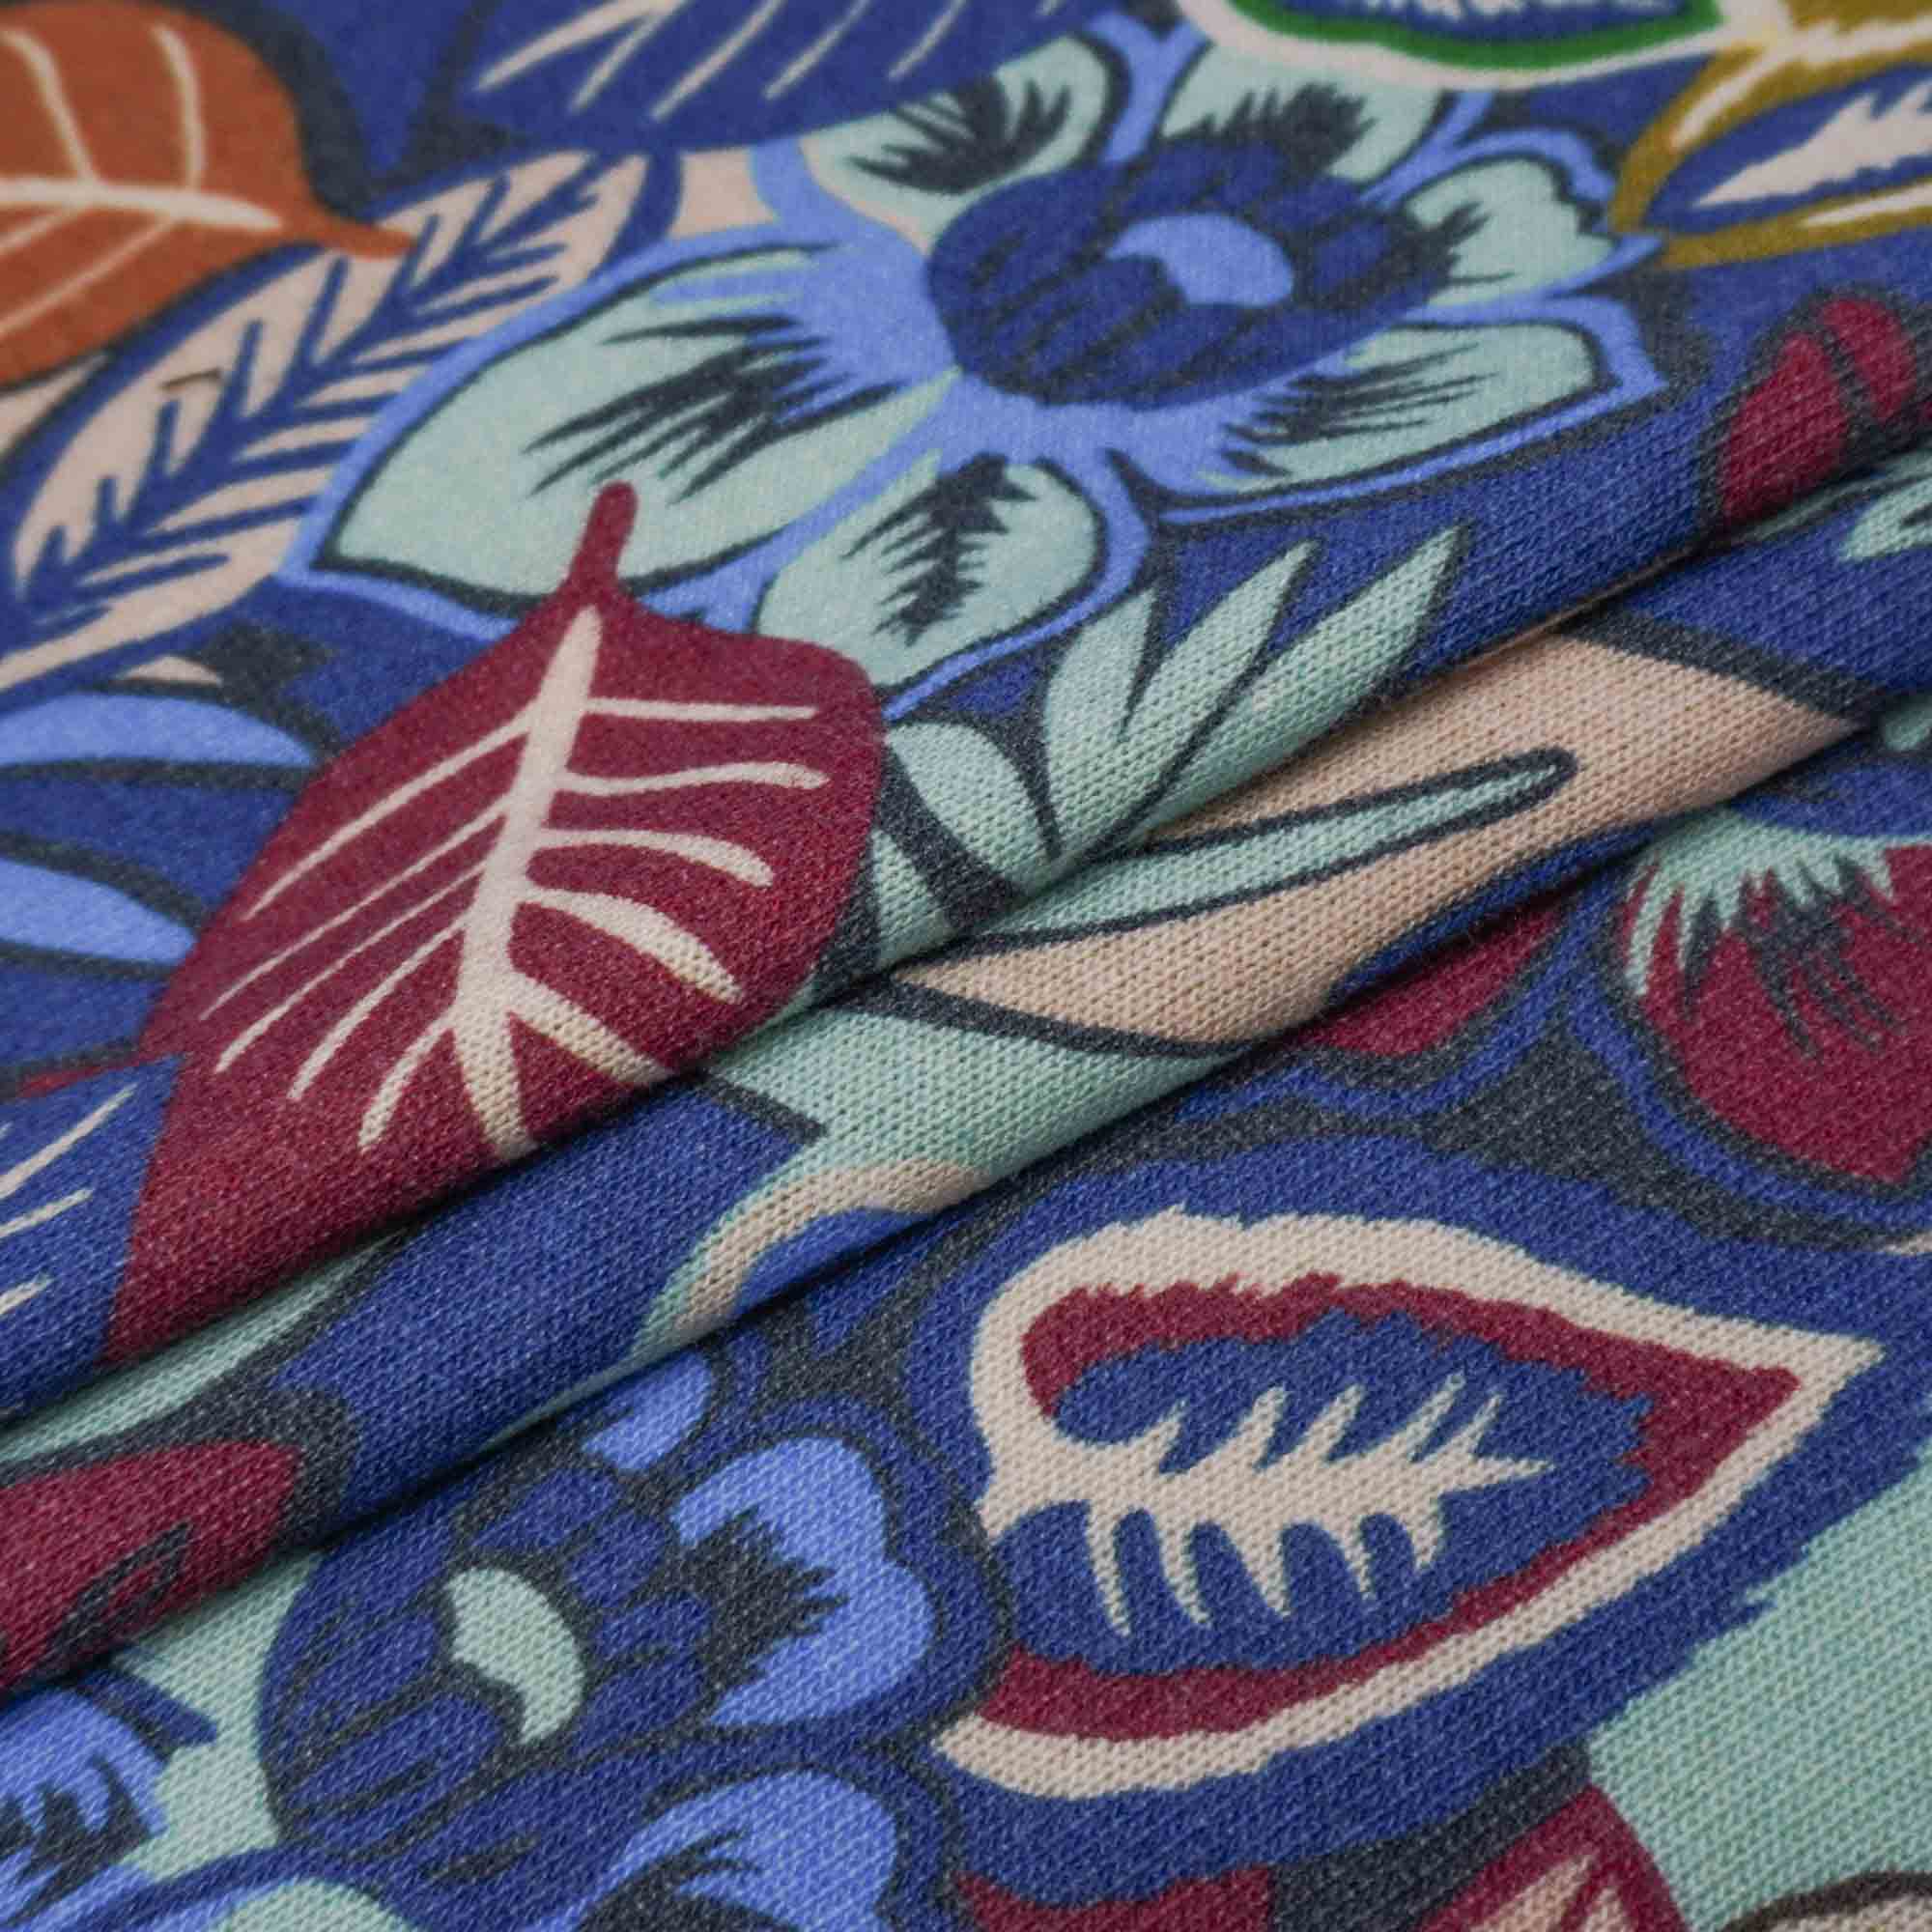 Tecido malha tricot estampado floral (tecido italiano legitímo)